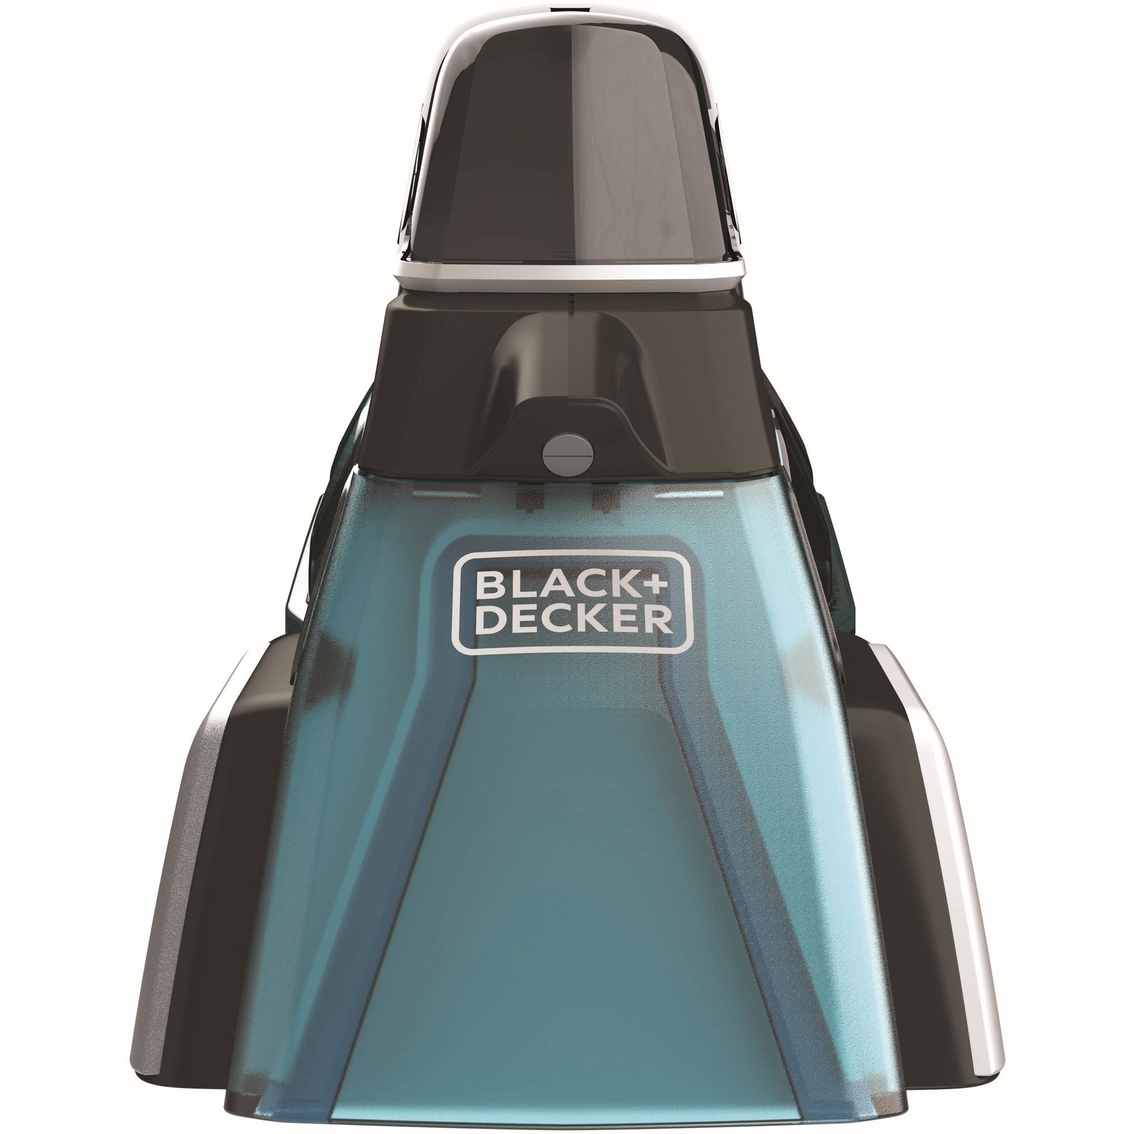 BLACK+DECKER spillbuster Cordless Spill + Spot Cleaner Review 